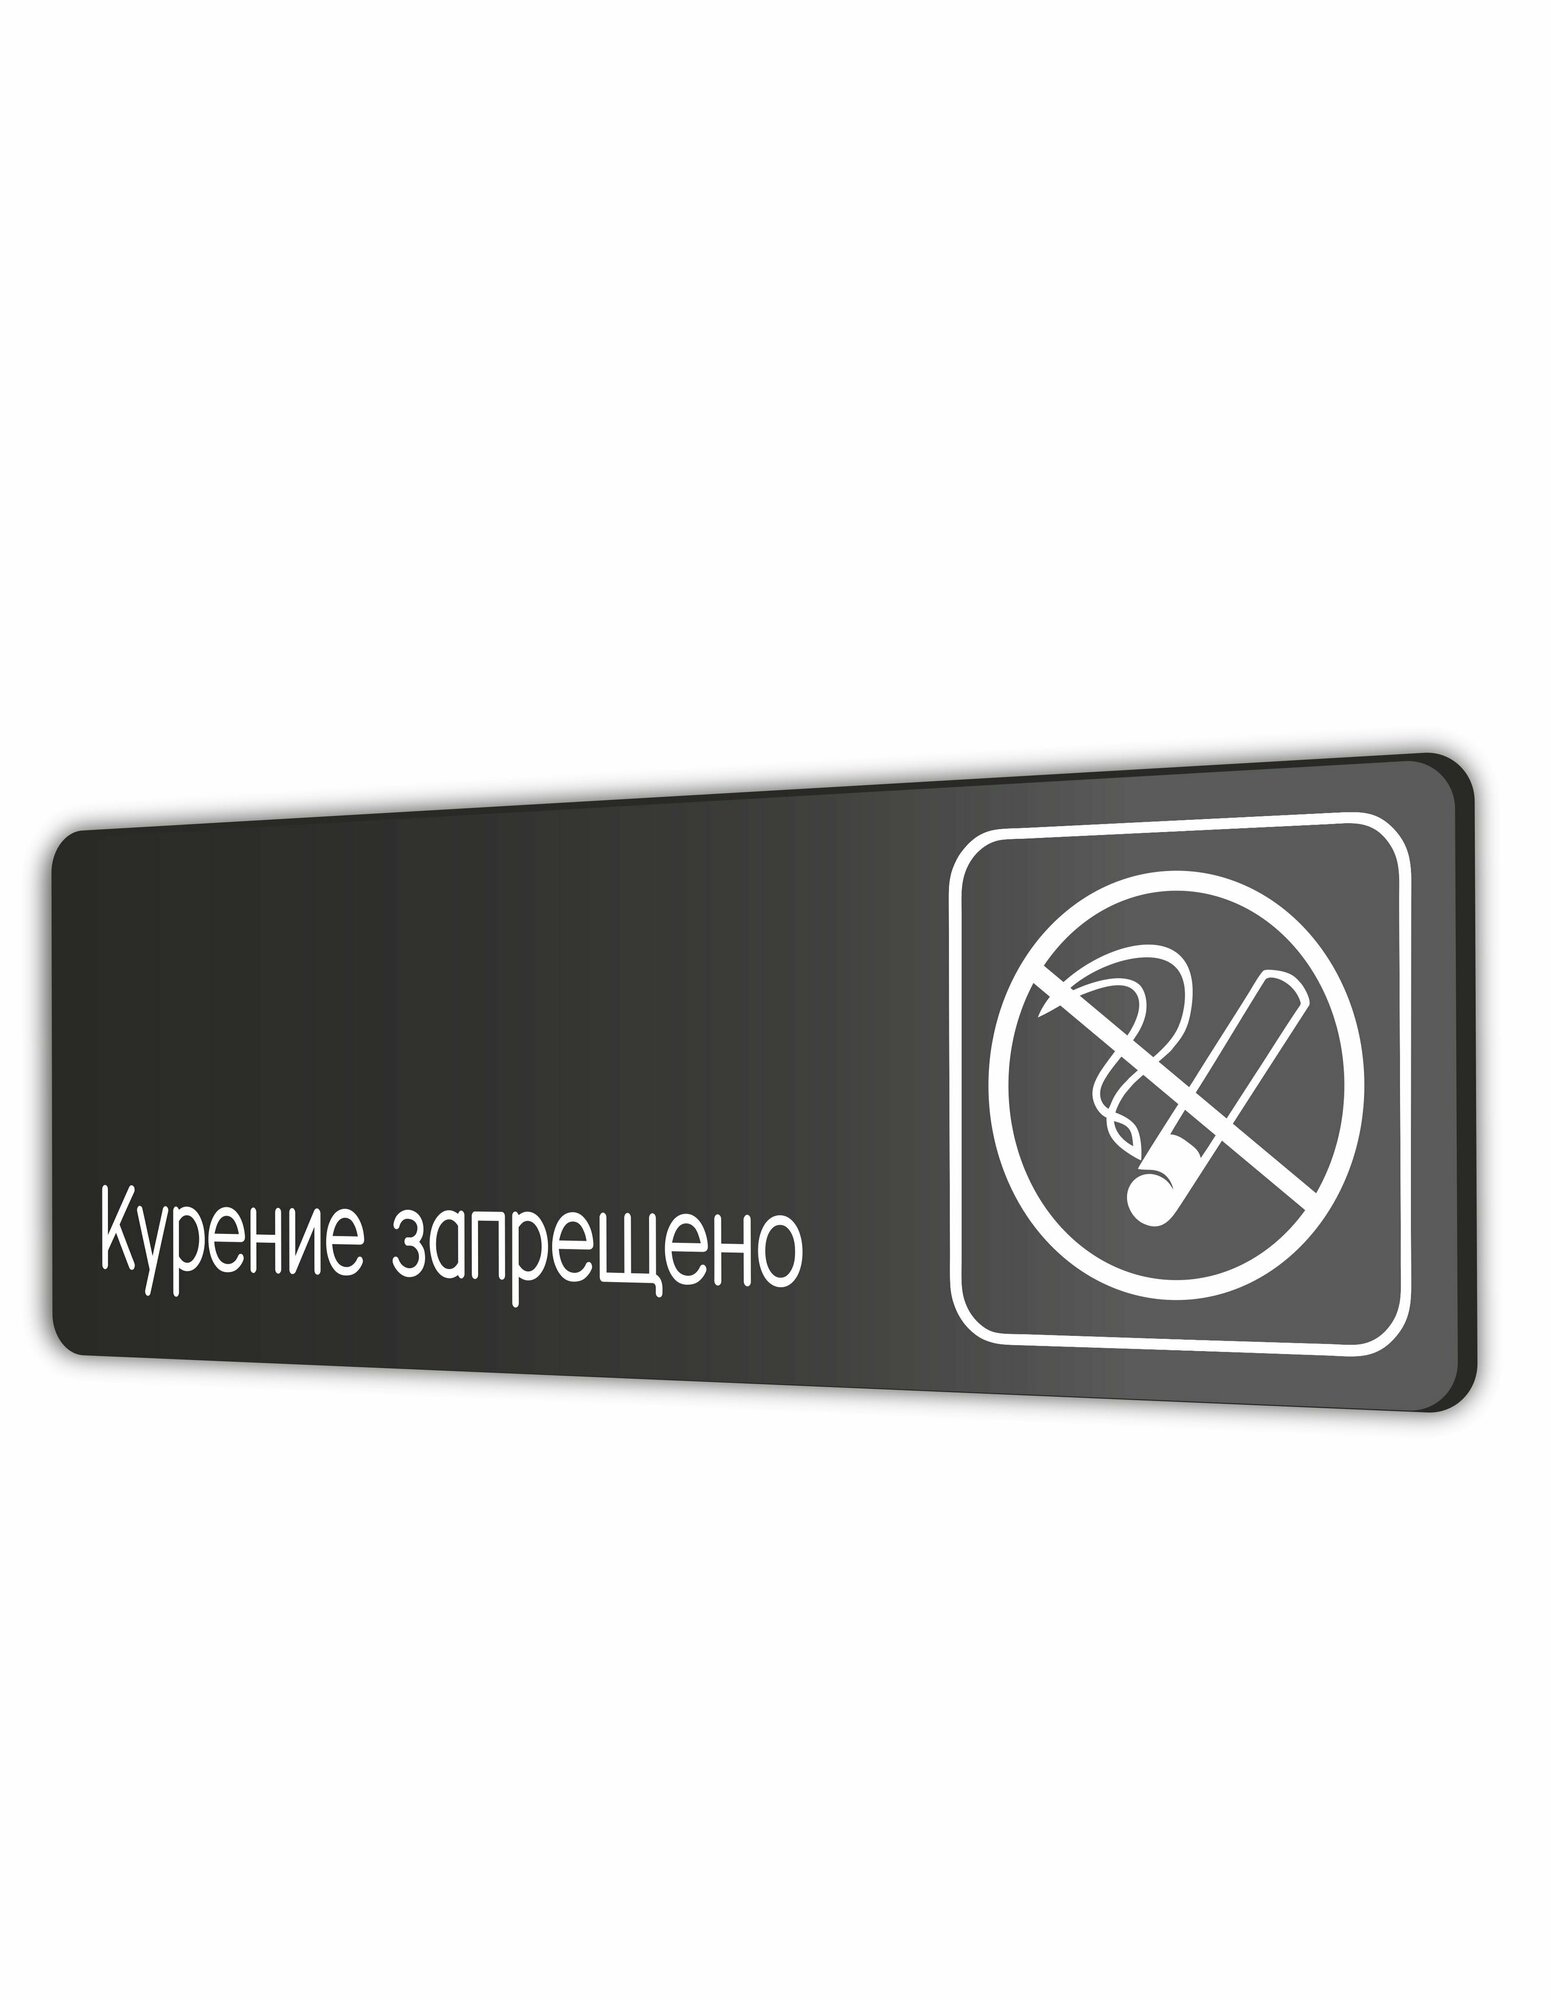 Табличка Курение запрещено в офис, на производство, кафе, ресторан 30х10см с двусторонним скотчем